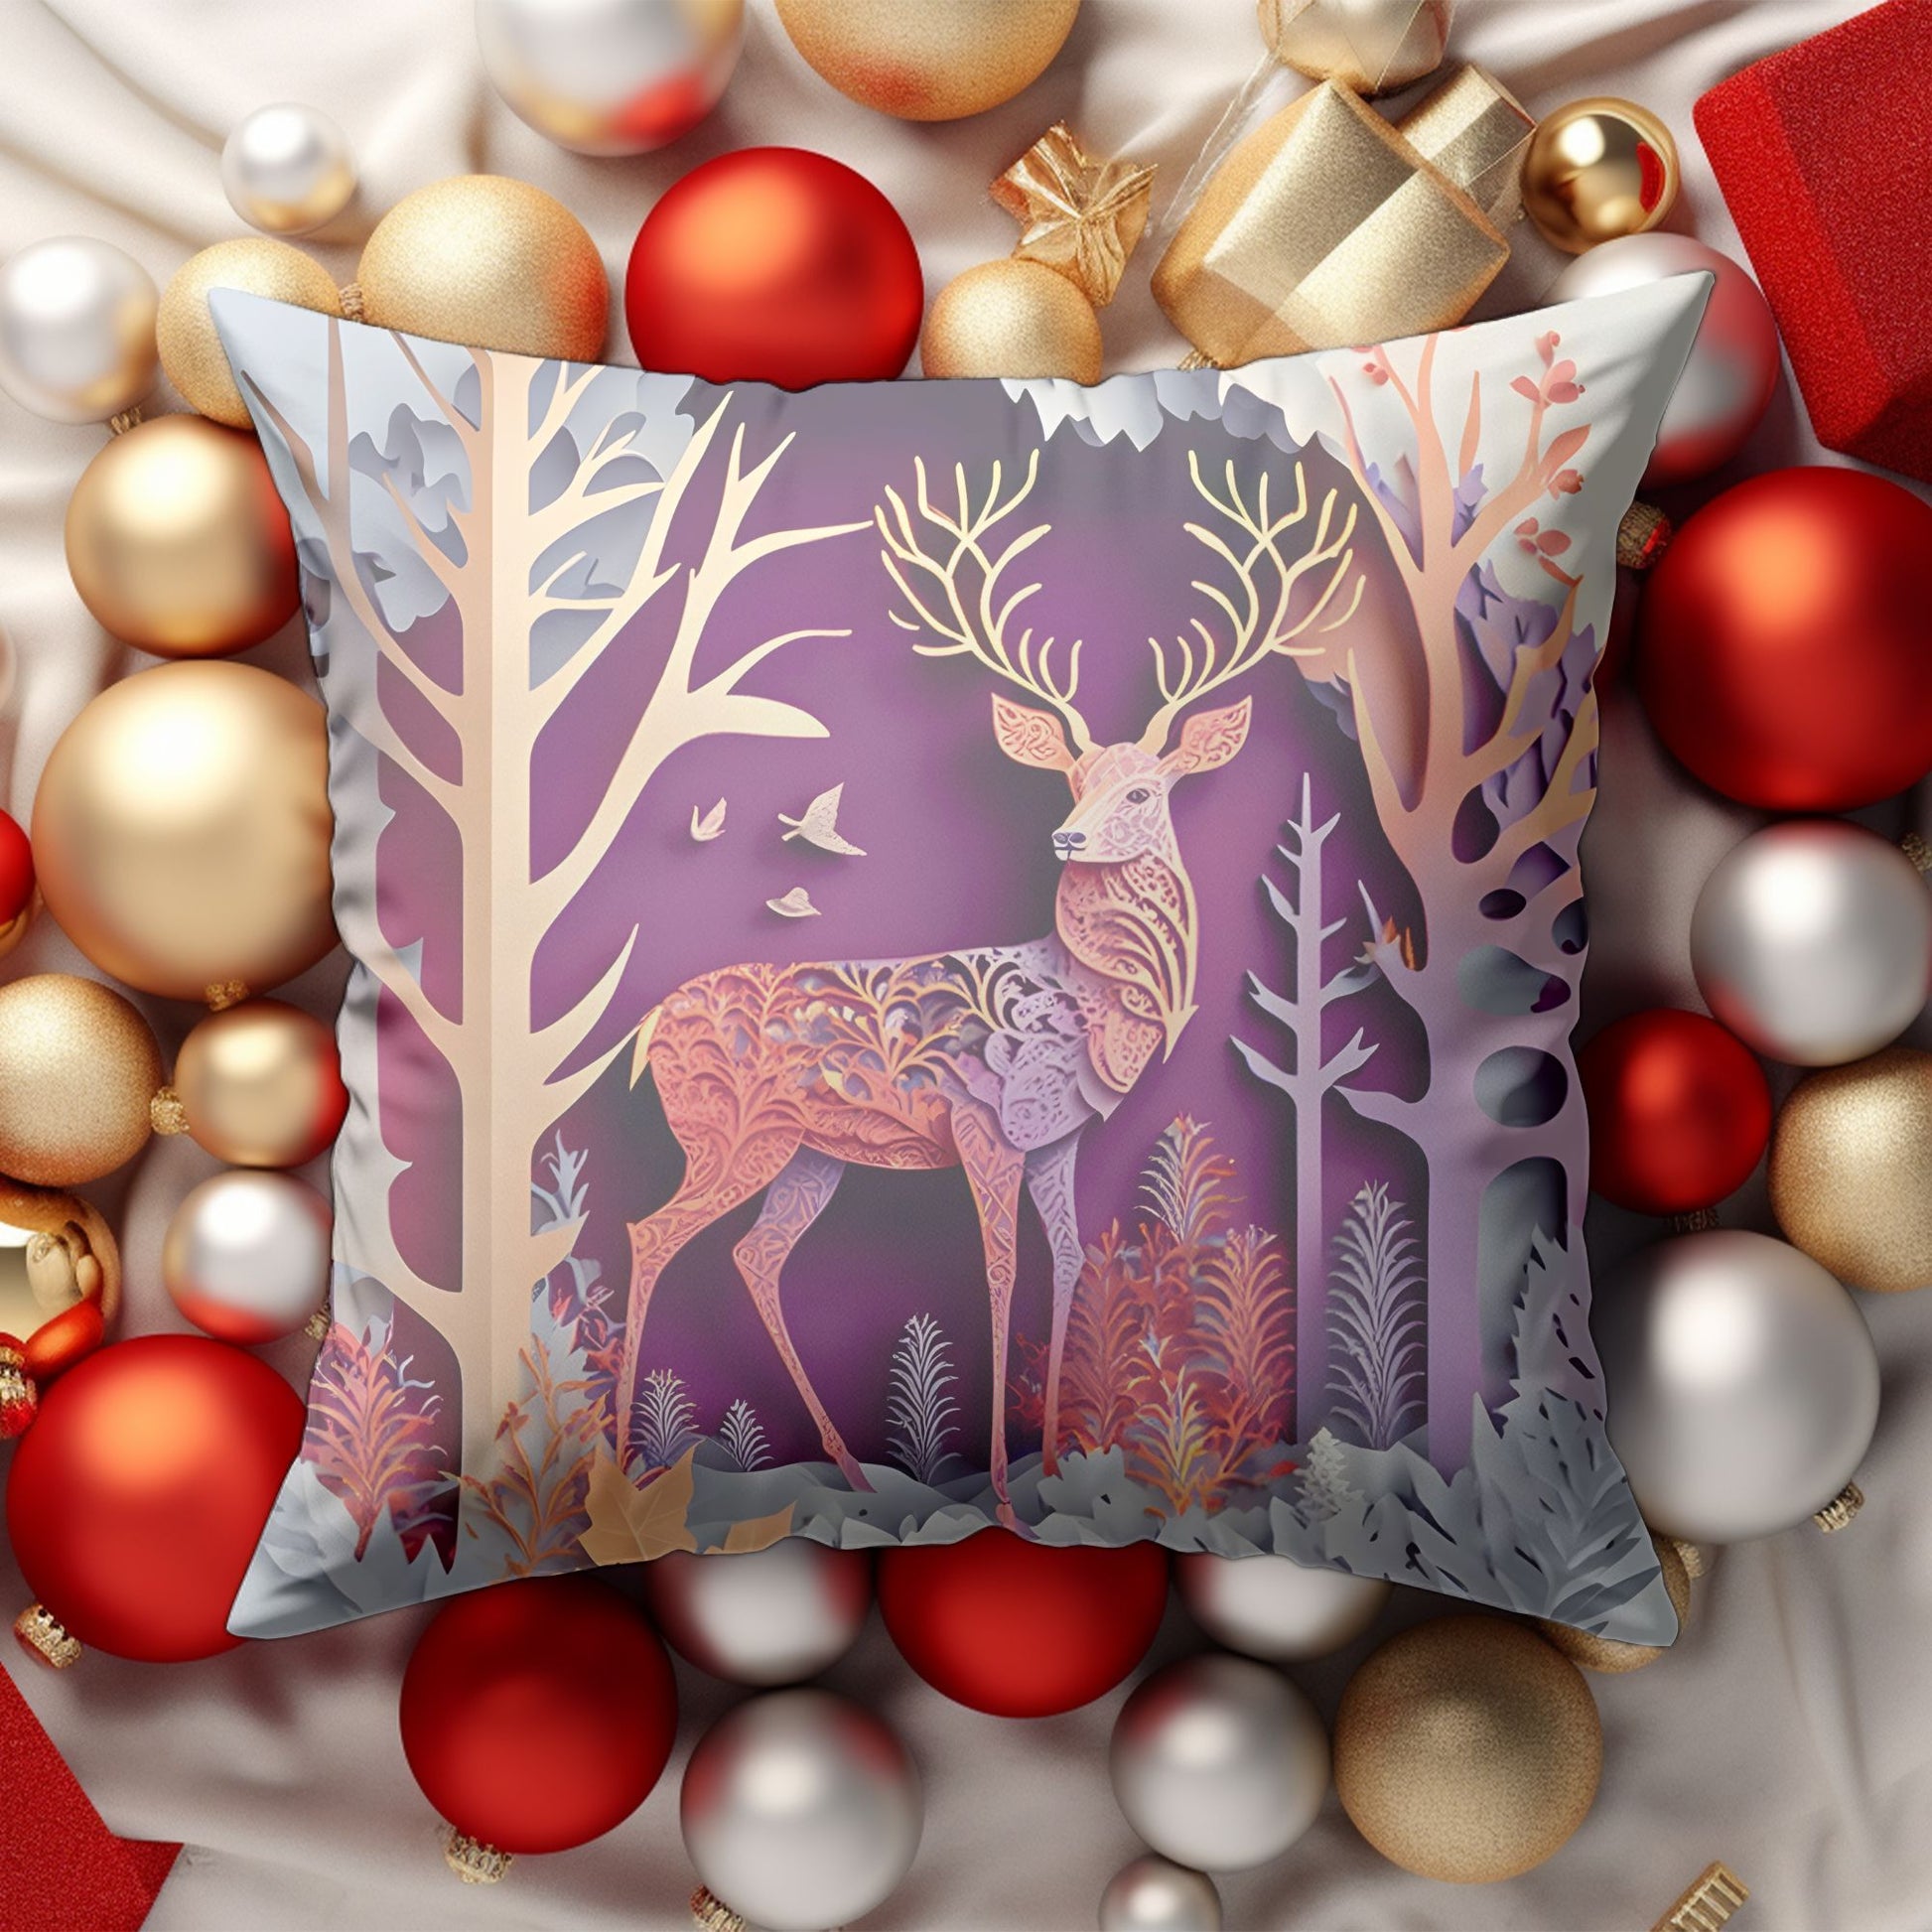 Festive Reindeer Design Pillow for Holiday Decor